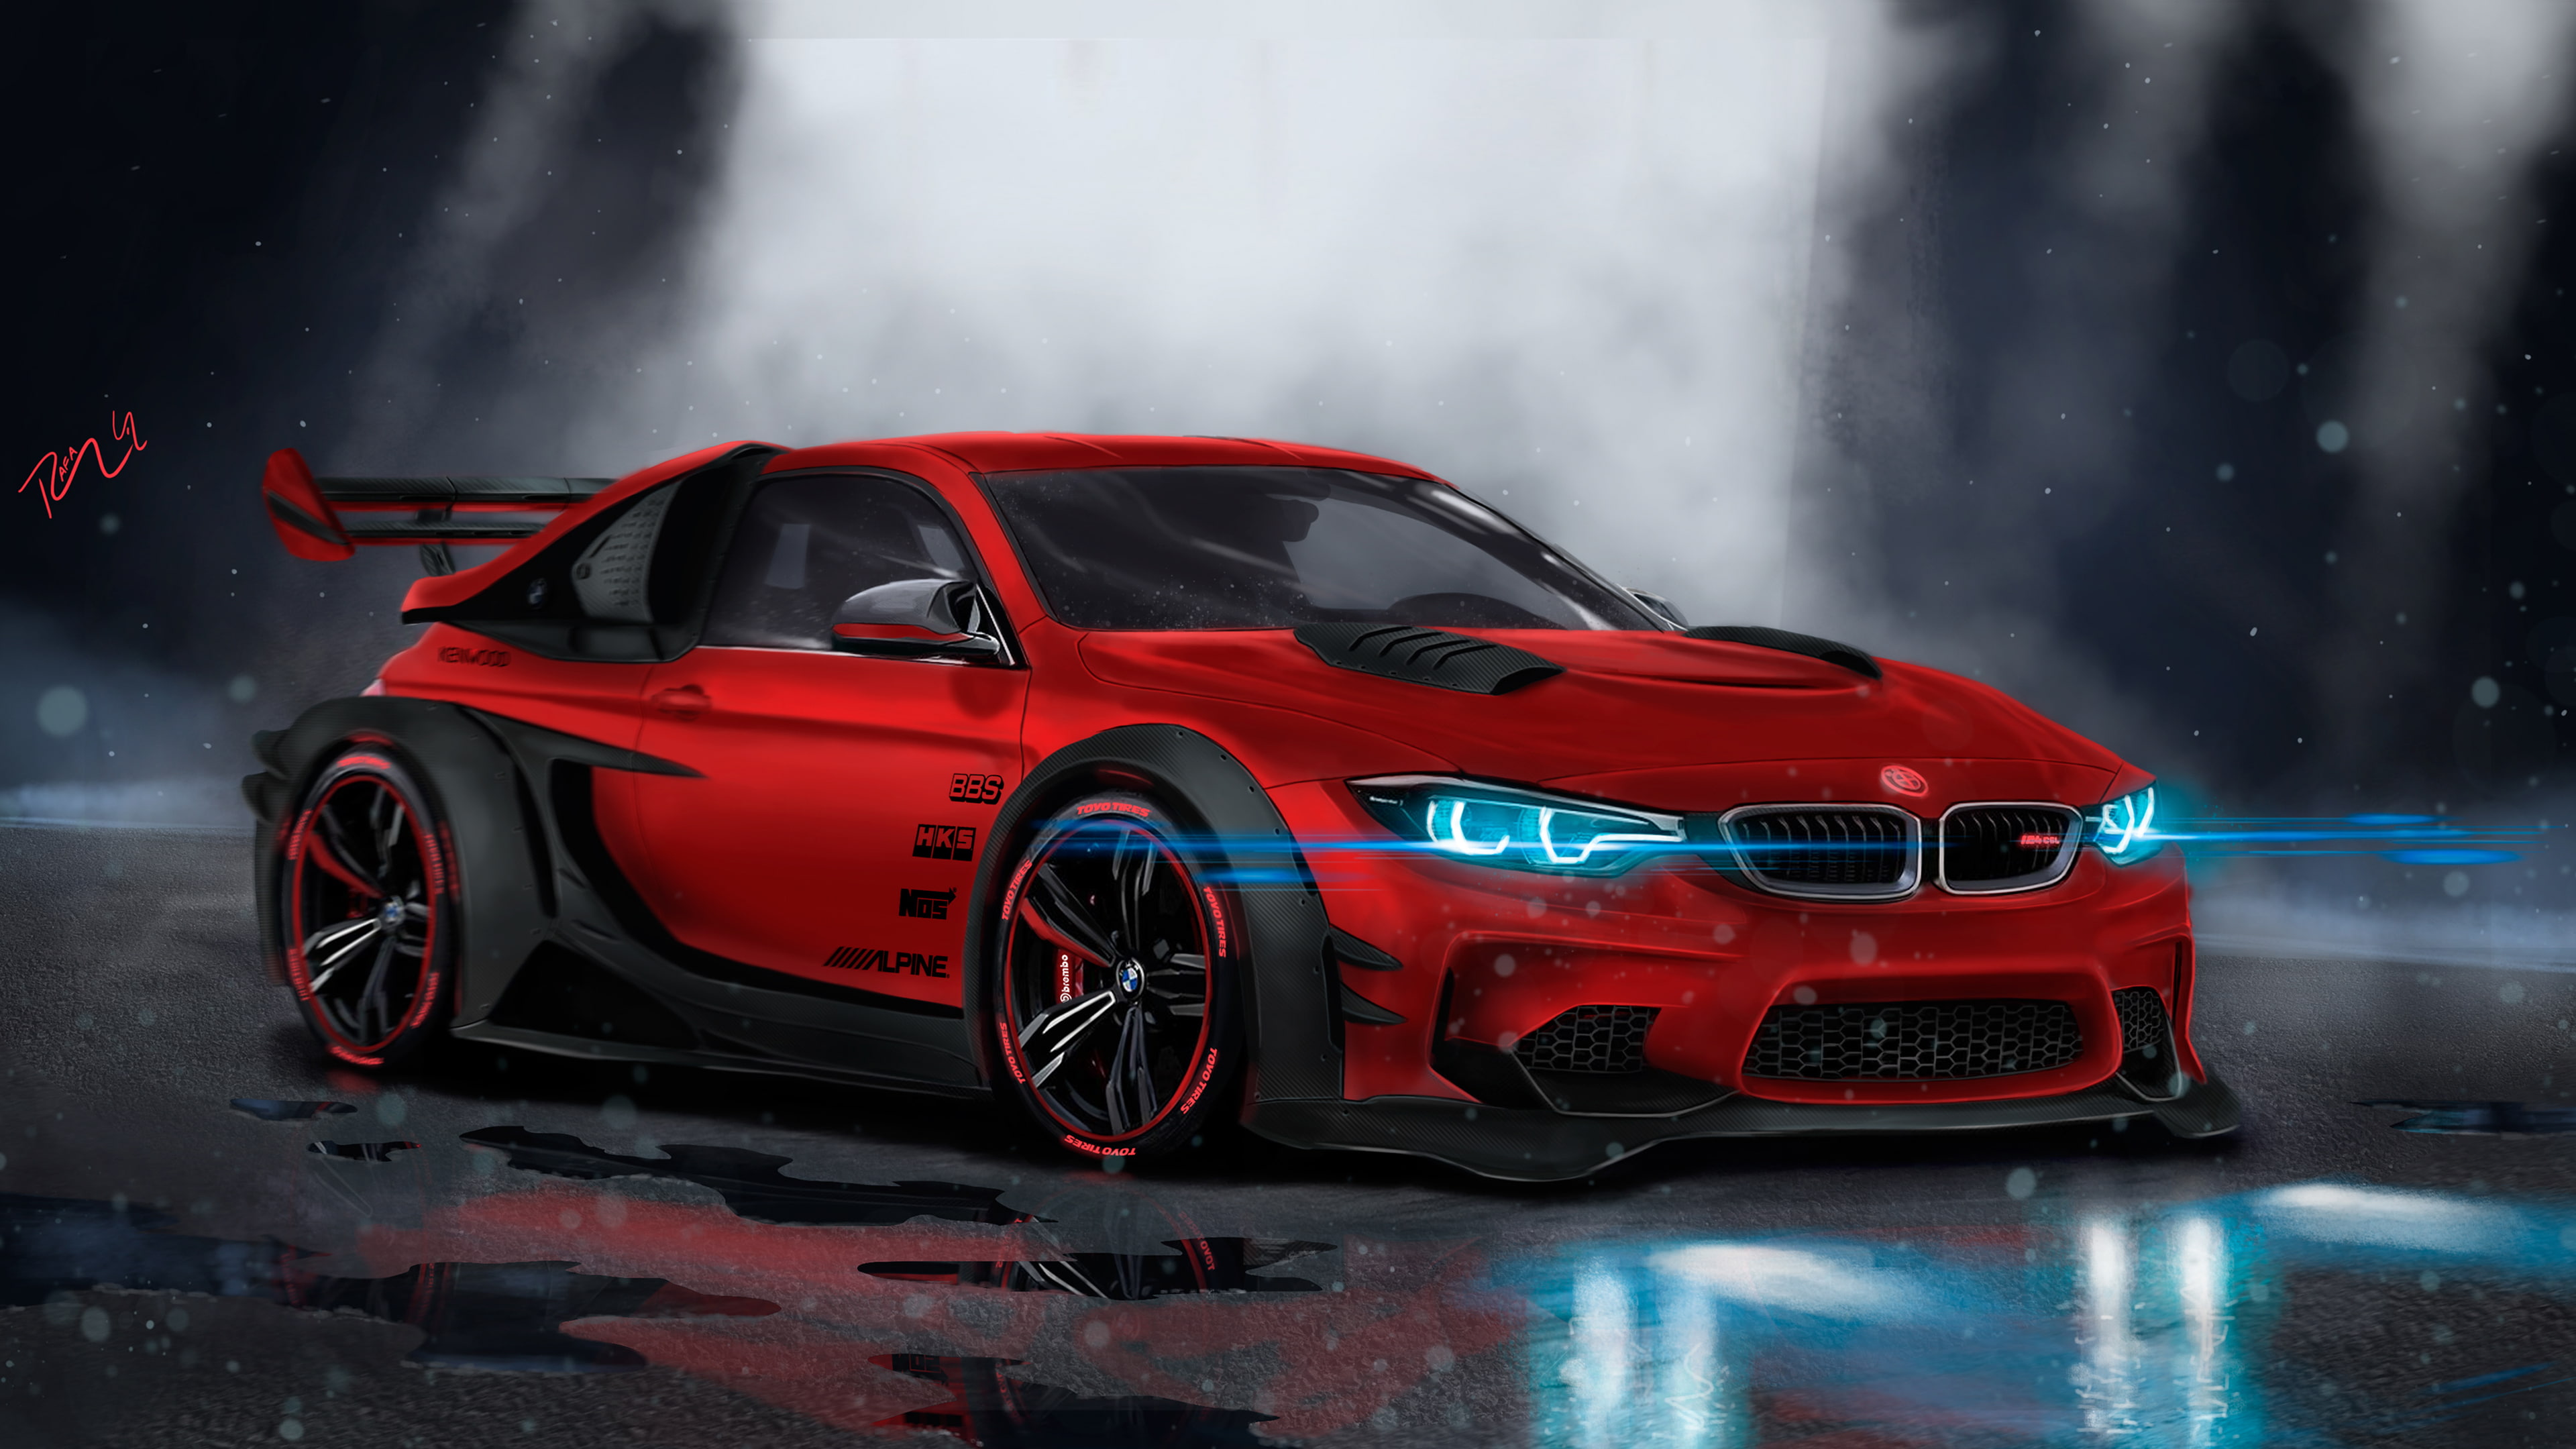 BMW Supercar Concept Art 4K, motor vehicle, mode of transportation